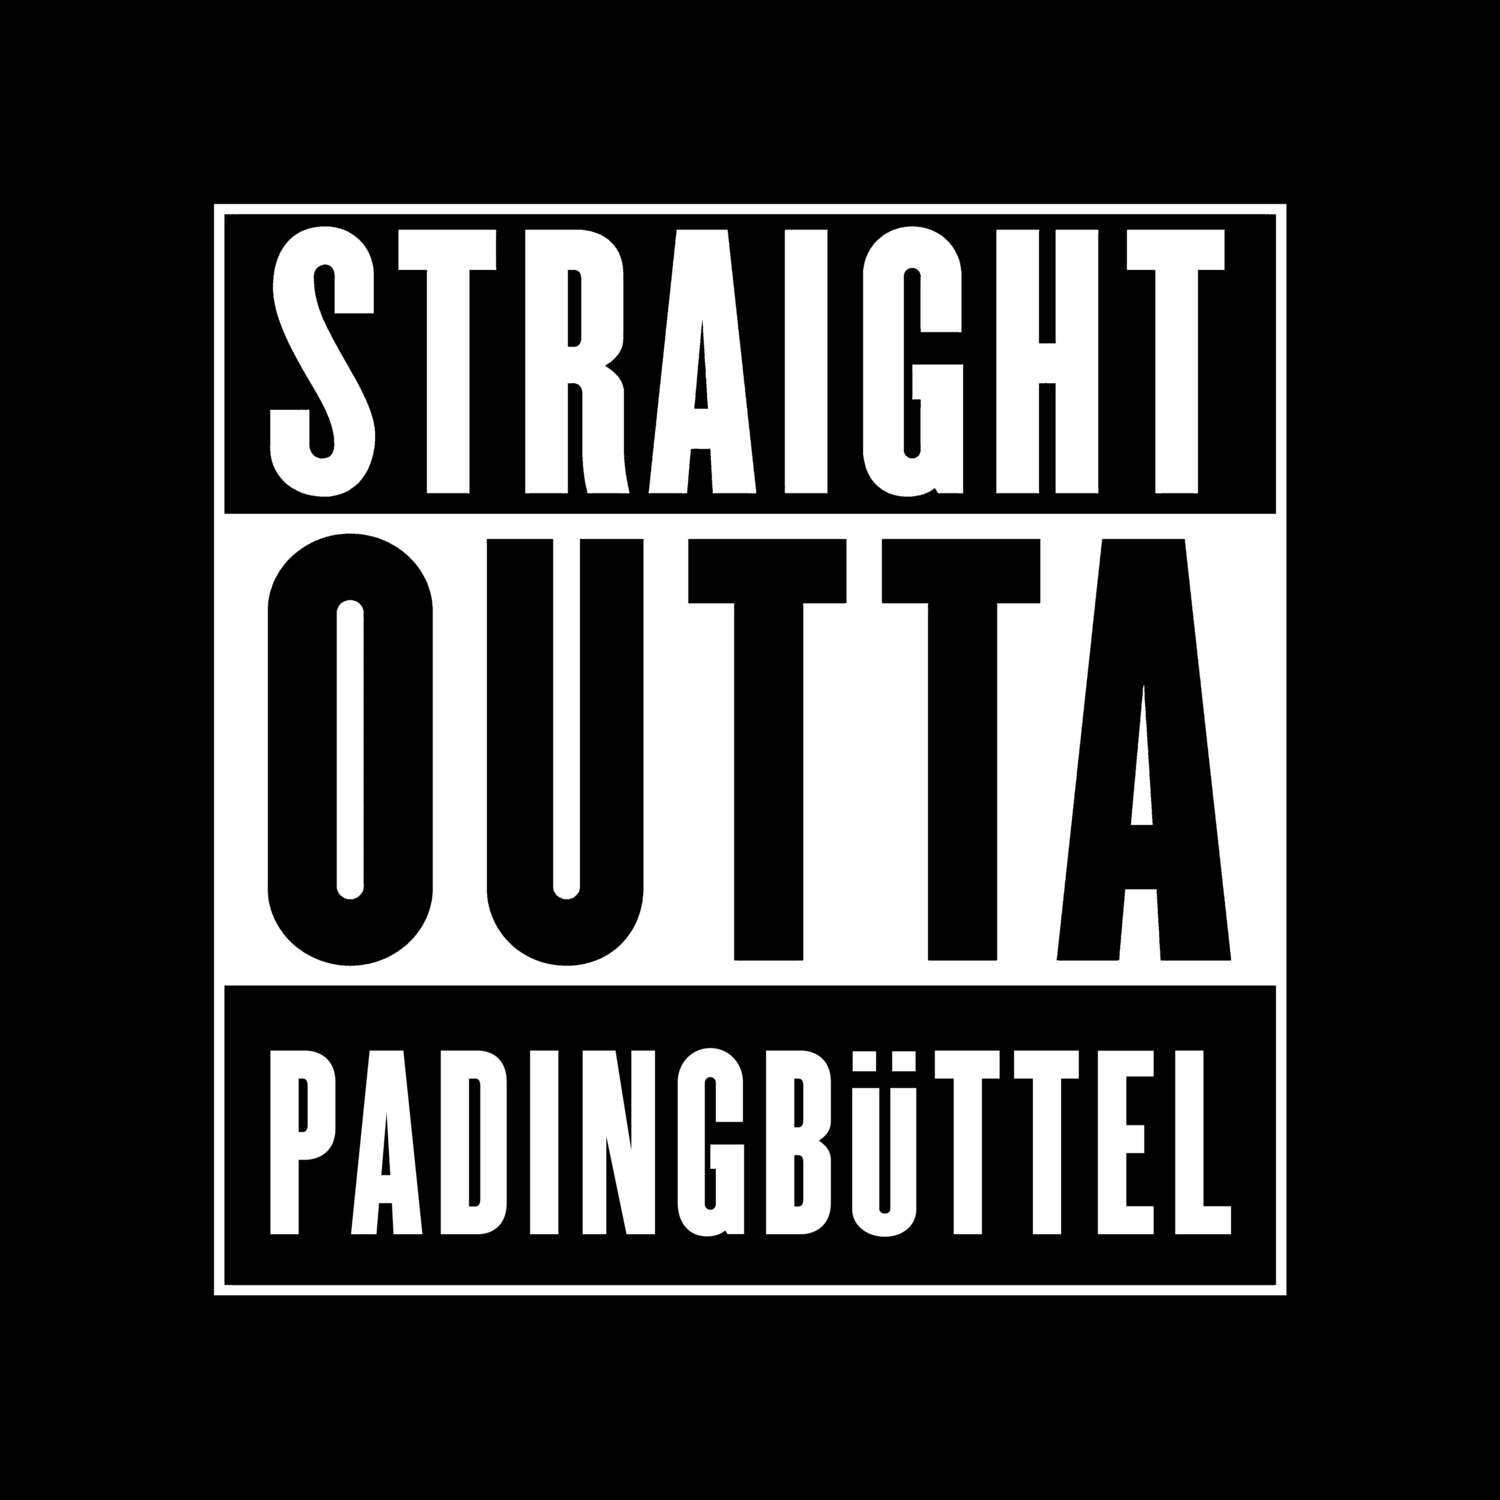 Padingbüttel T-Shirt »Straight Outta«